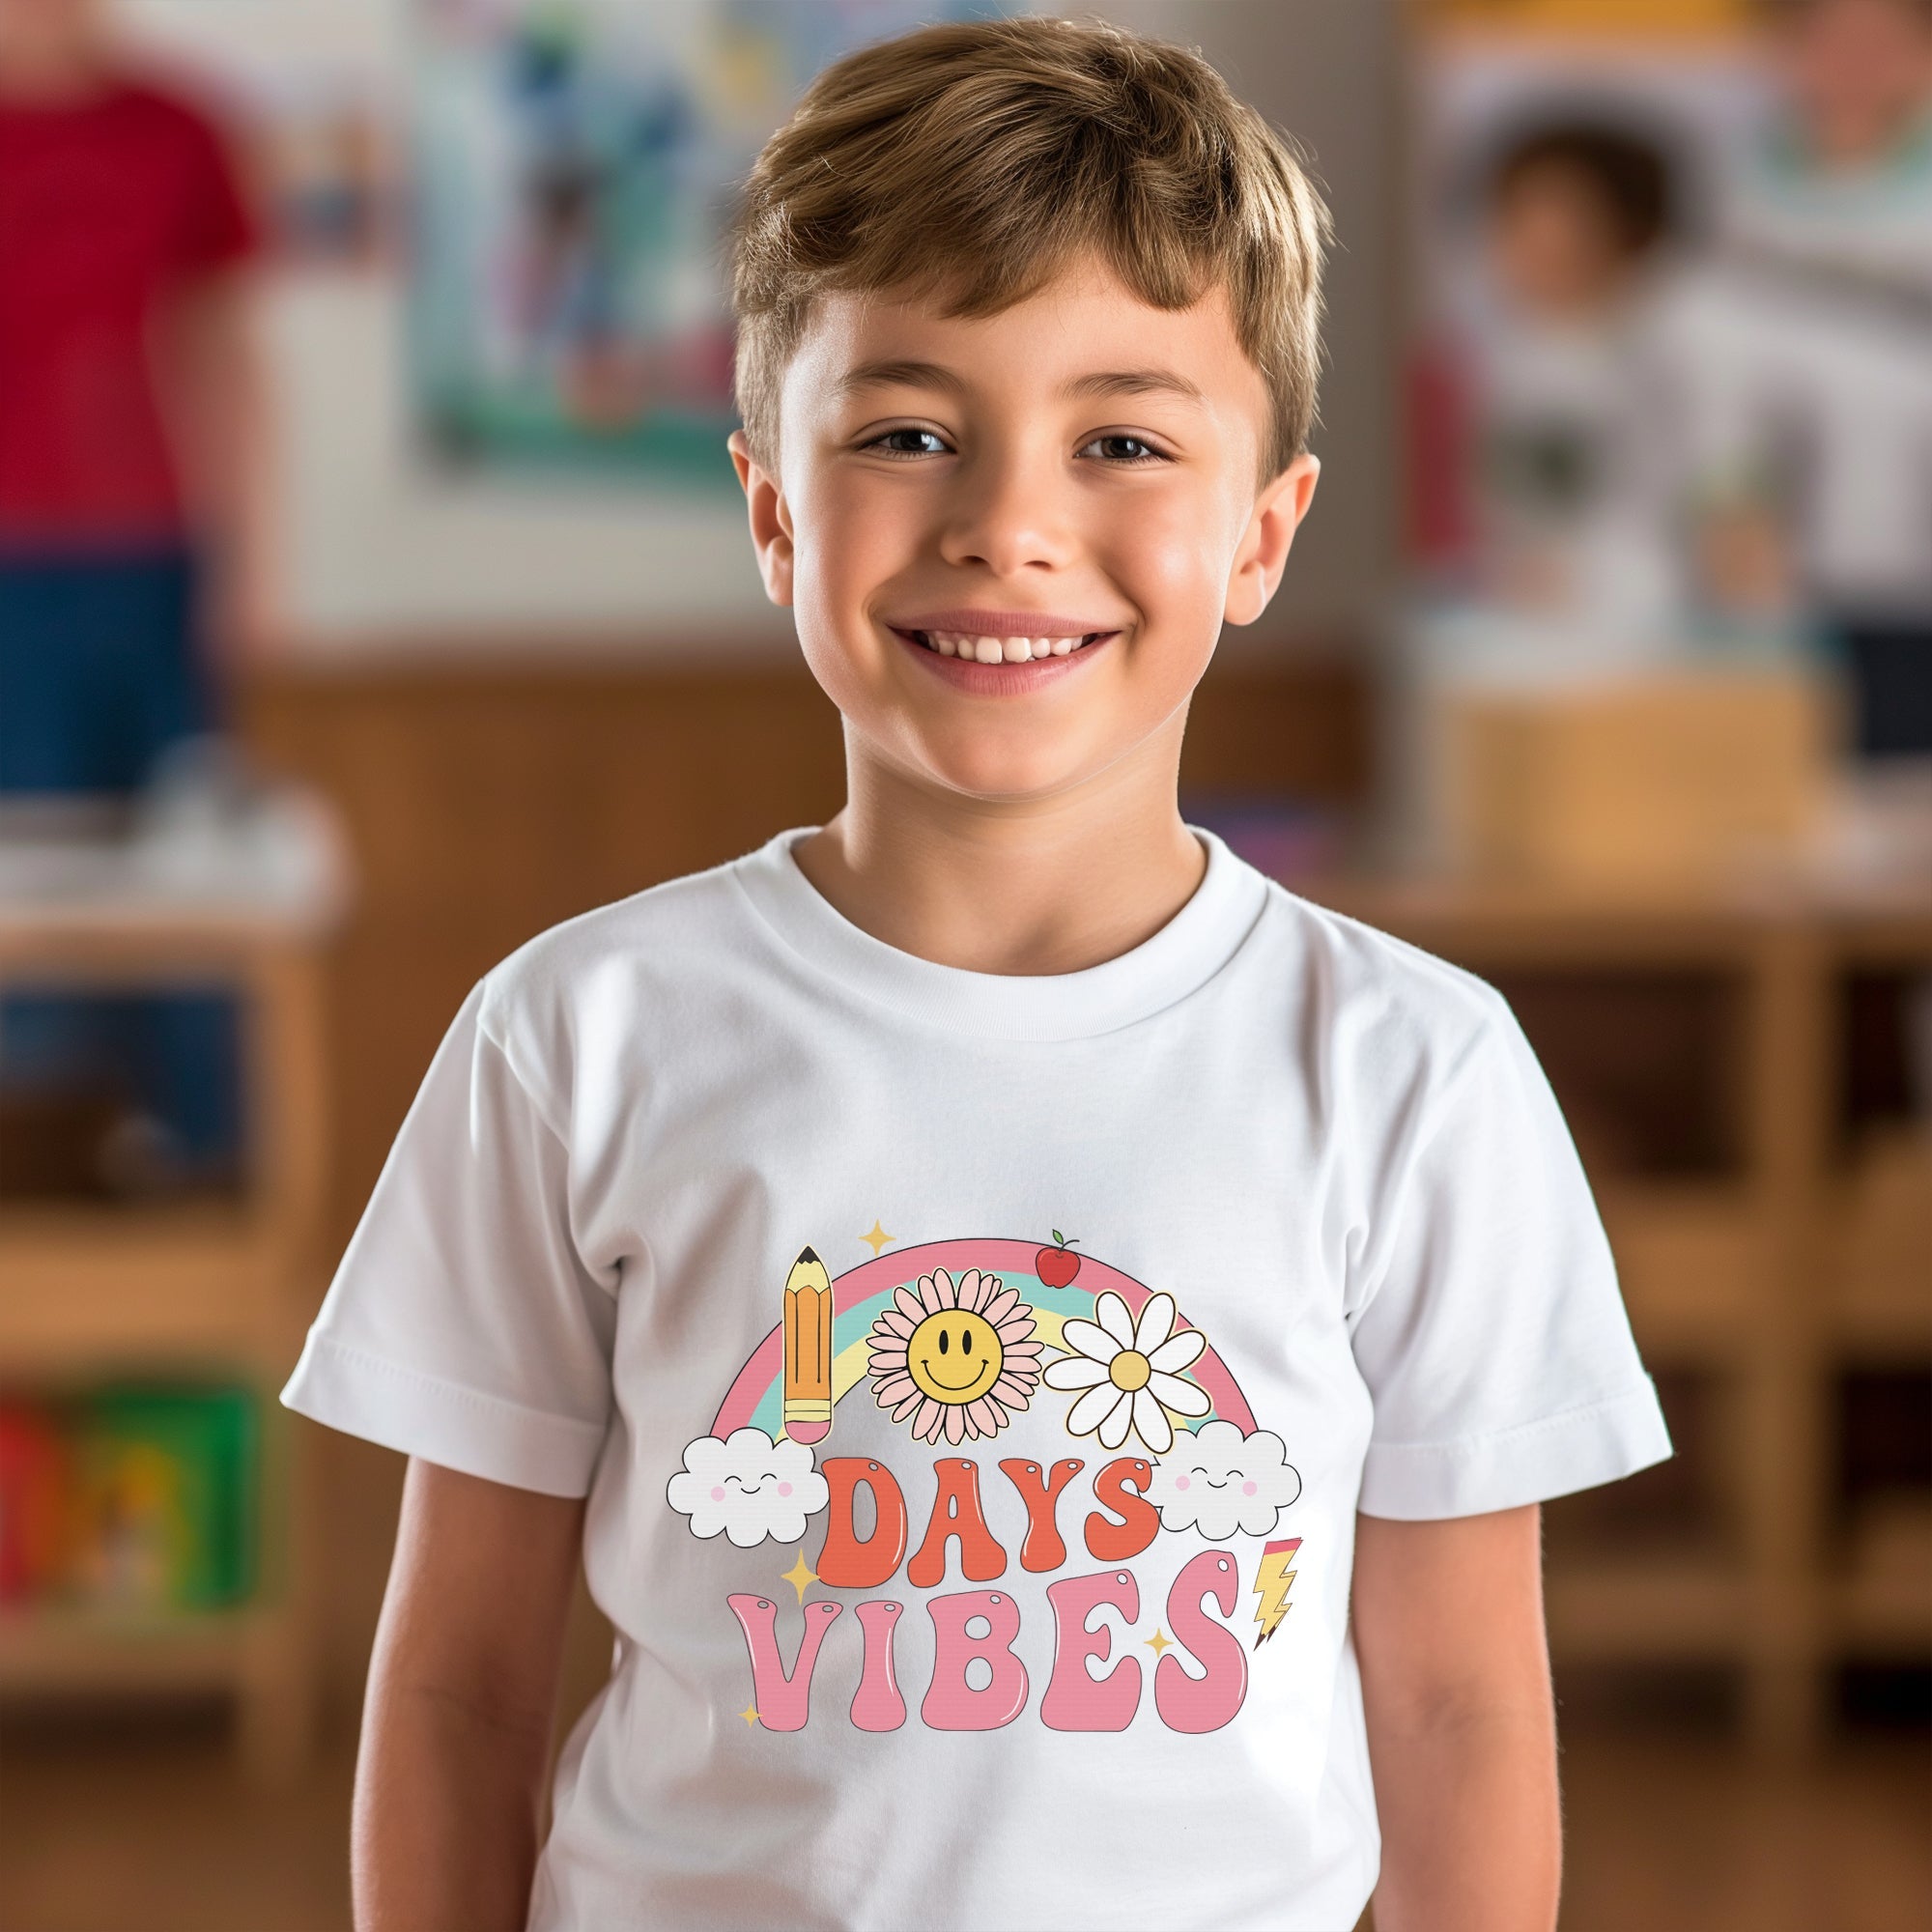 100 Days of School Kids T-Shirt 1178